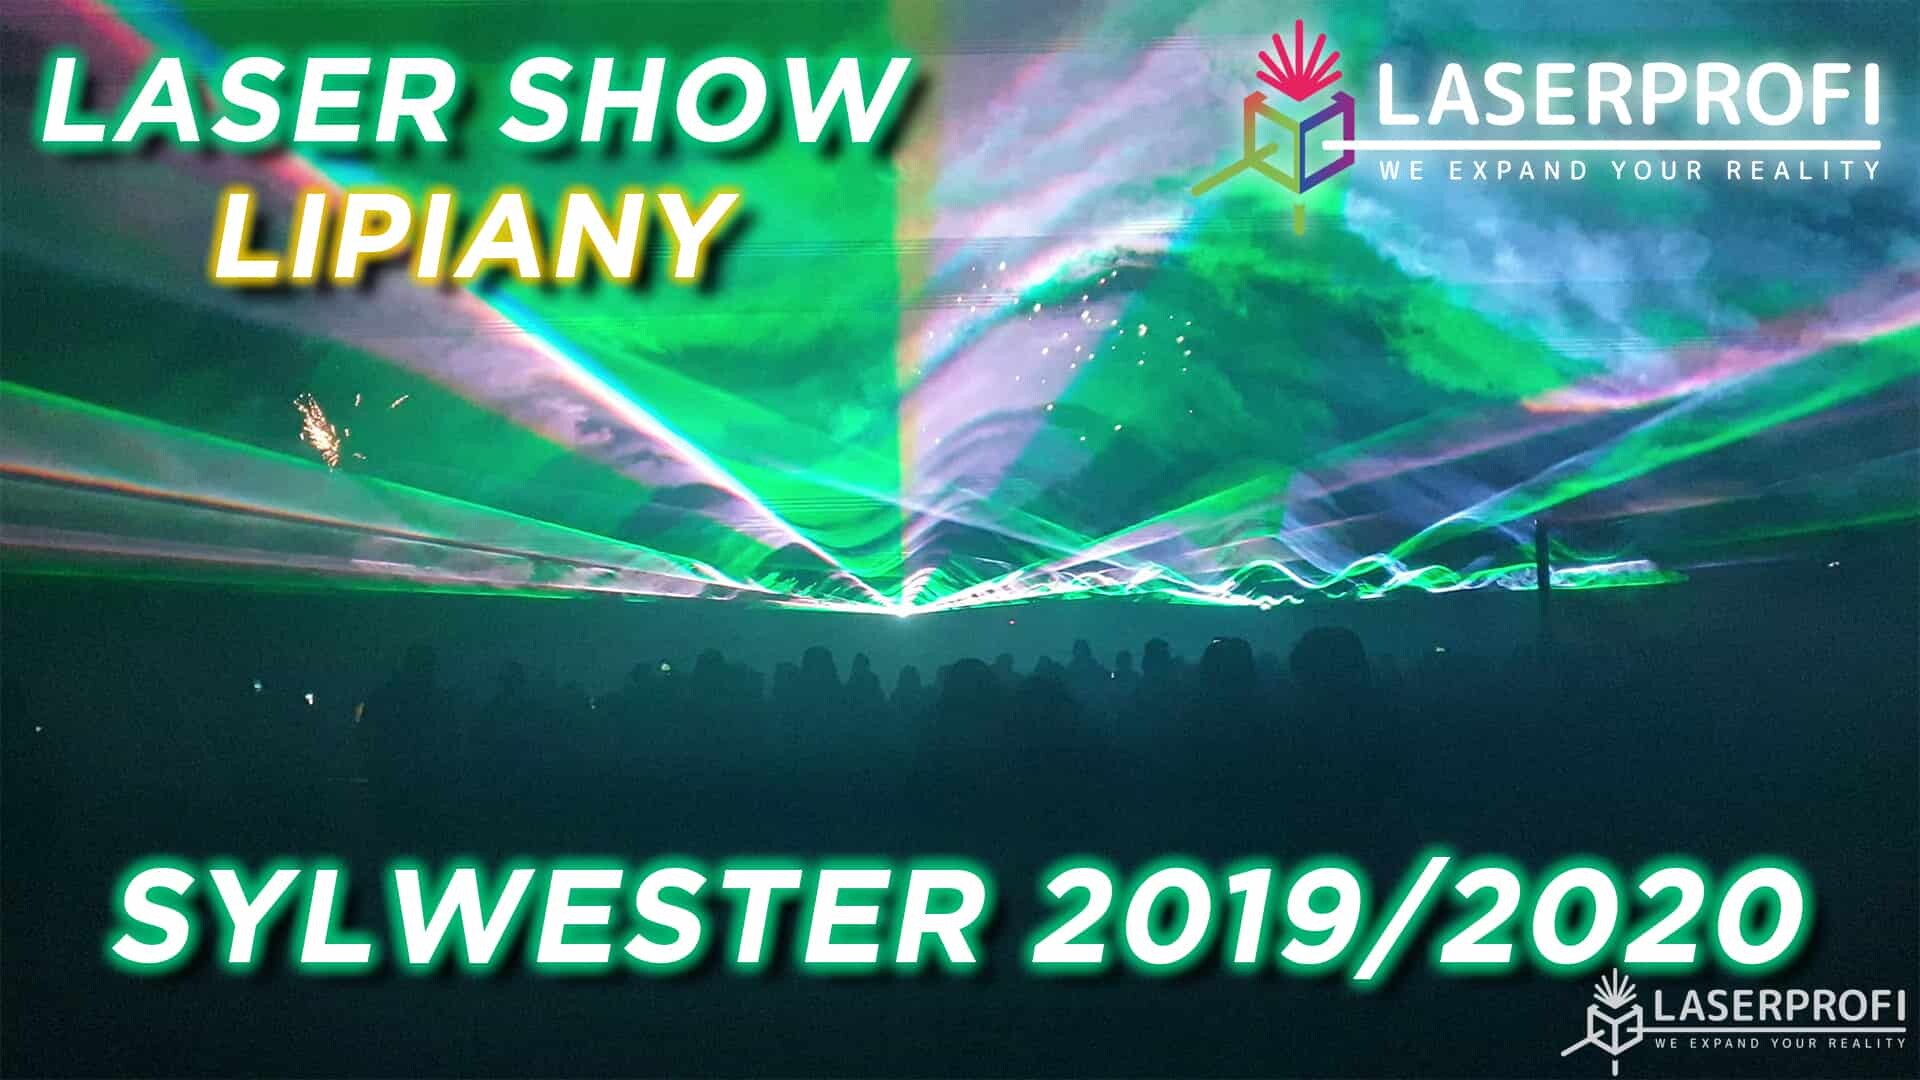 pokaz laserowy sylwester 2019 nowy rok 2020